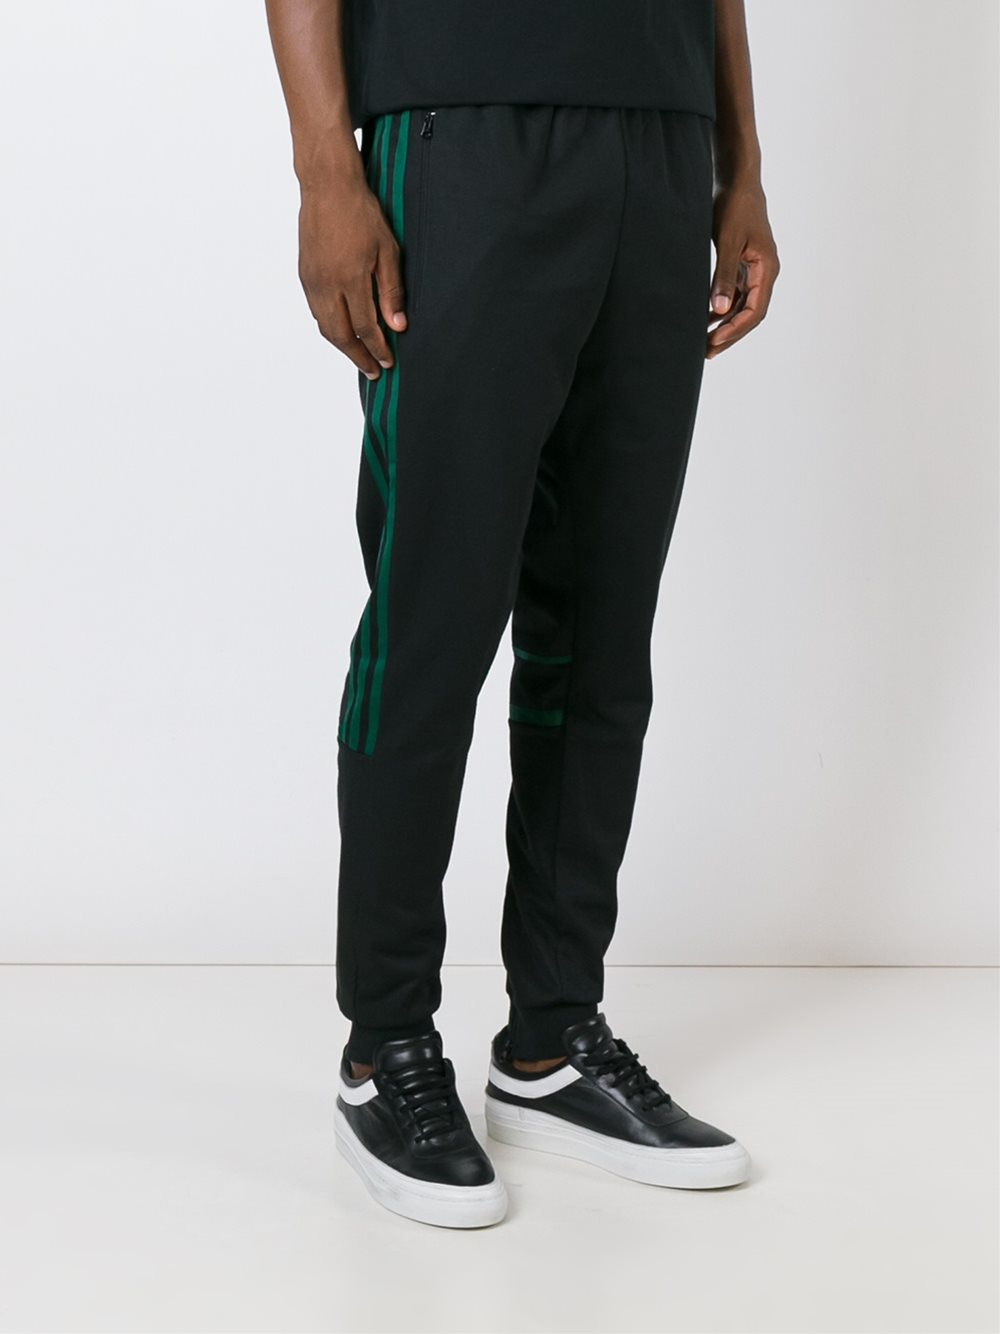 adidas Originals Cotton 'clr84' Track Pants in Black for Men - Lyst